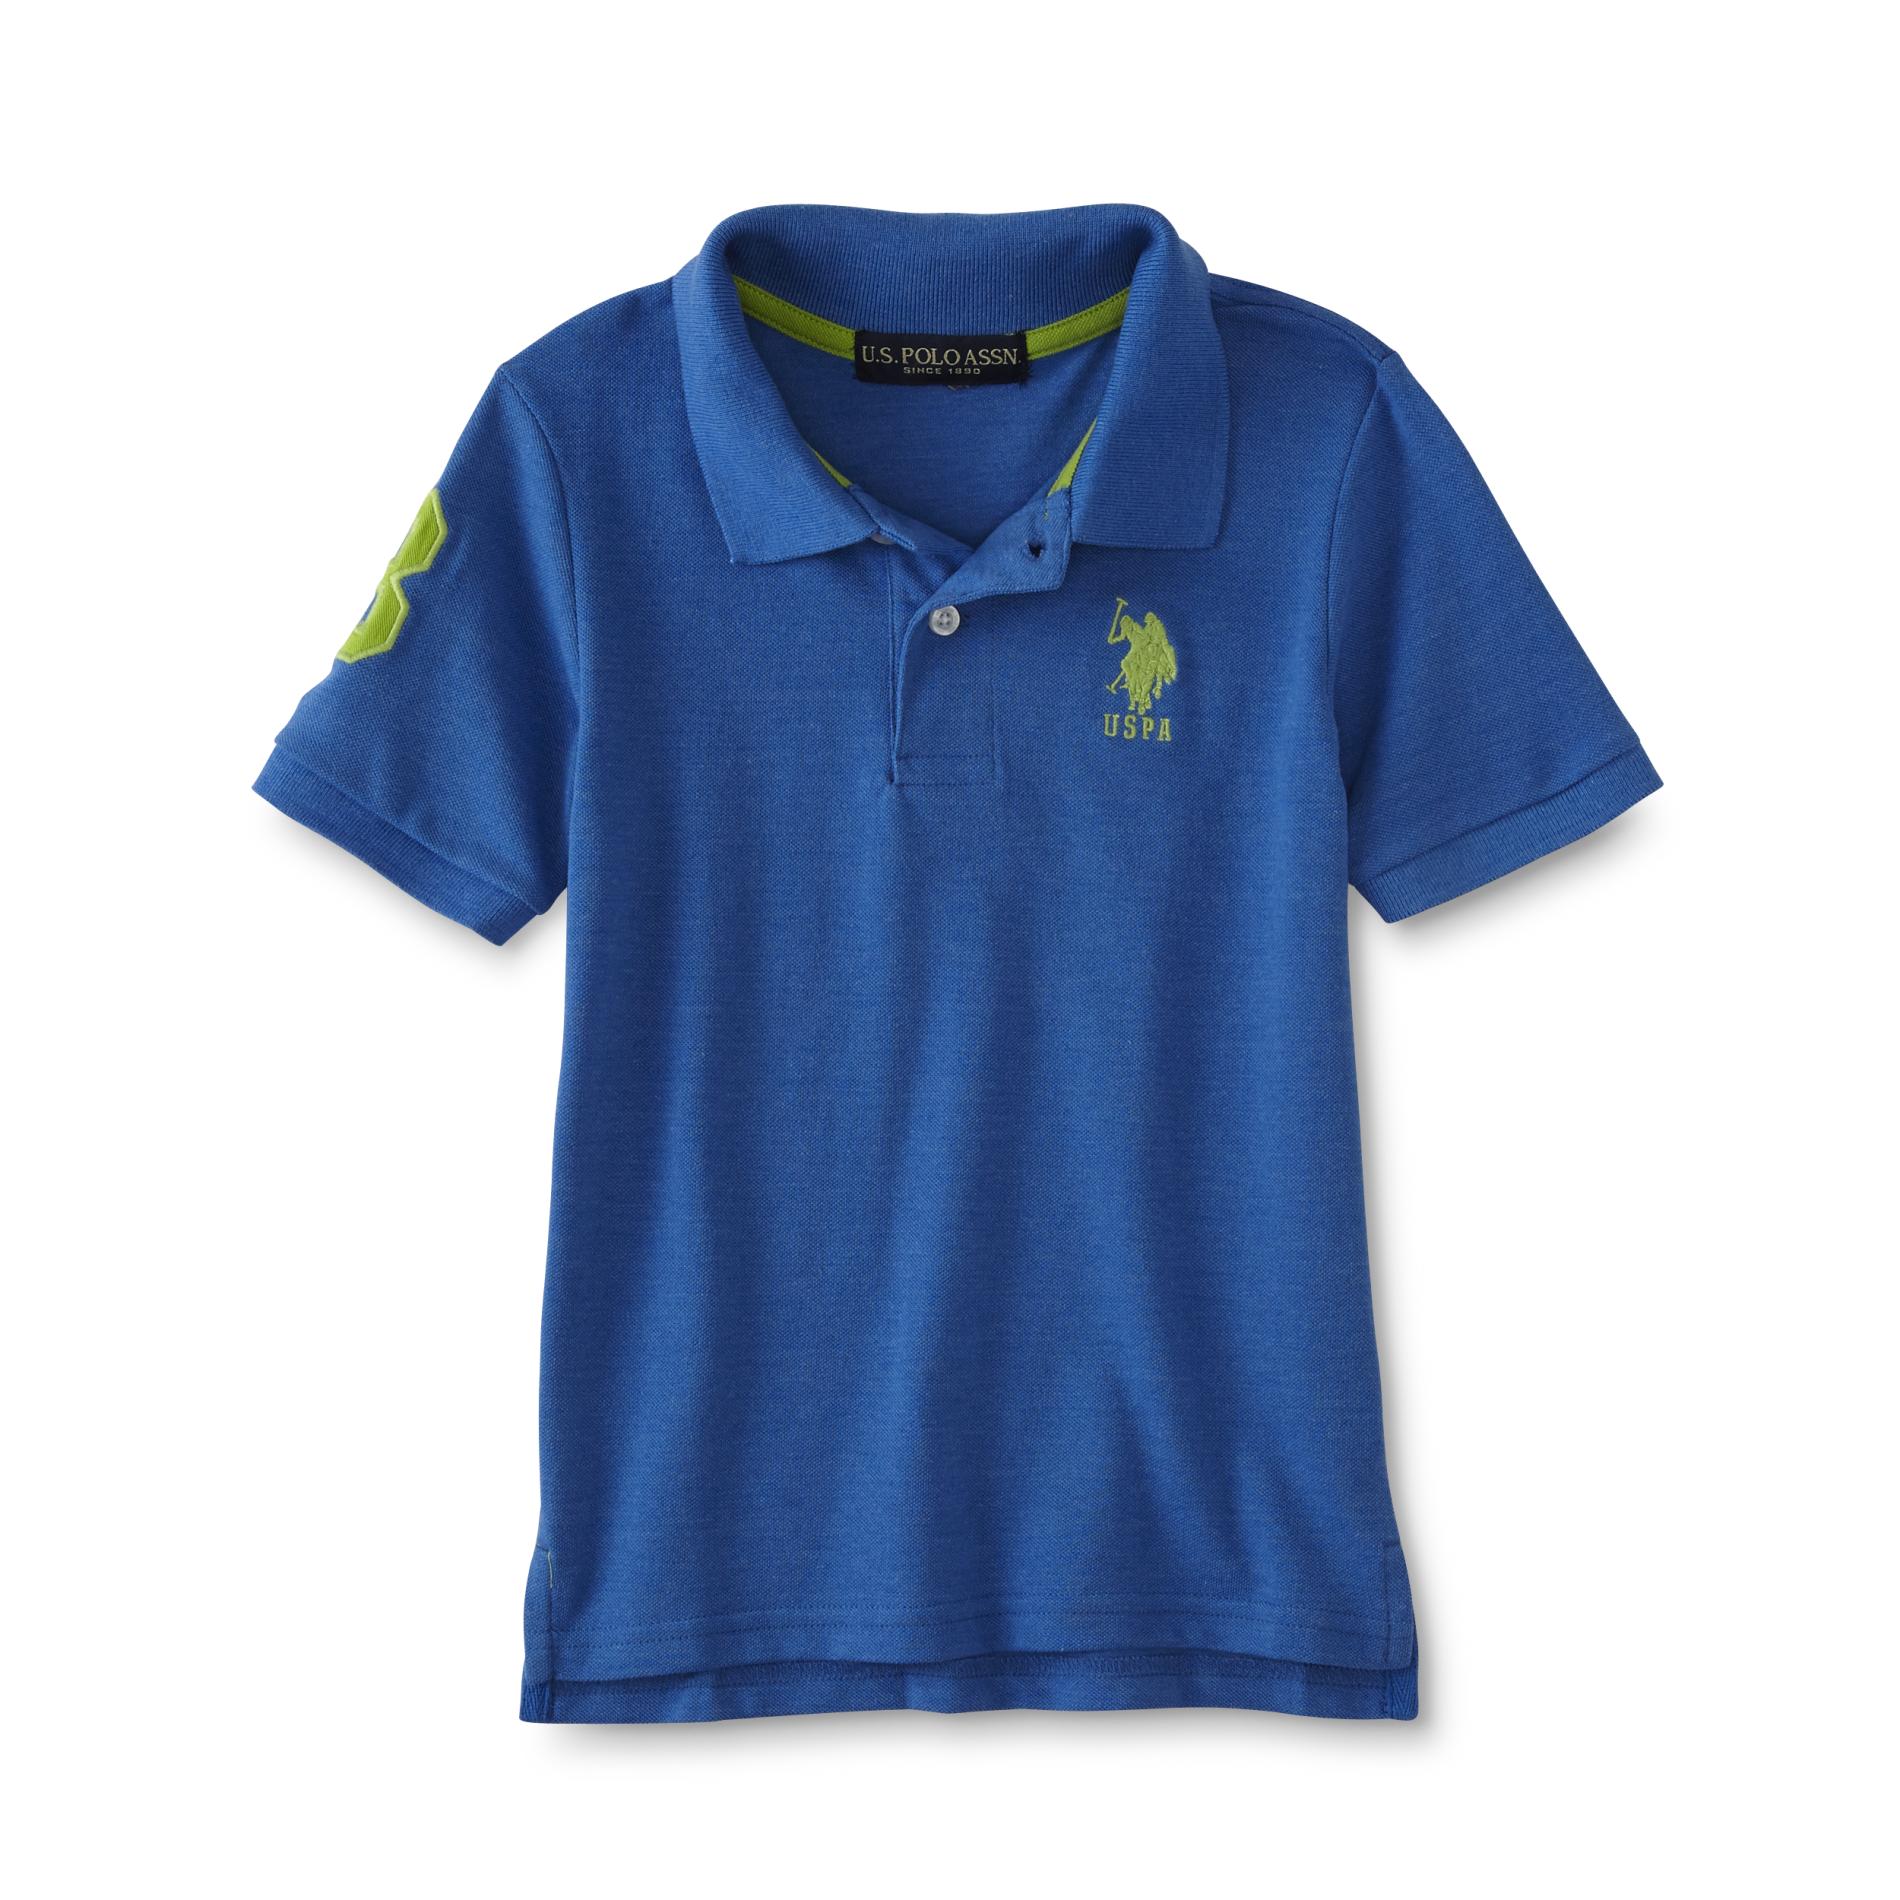 U.S. Polo Assn. Boy's Polo Shirt - Heathered